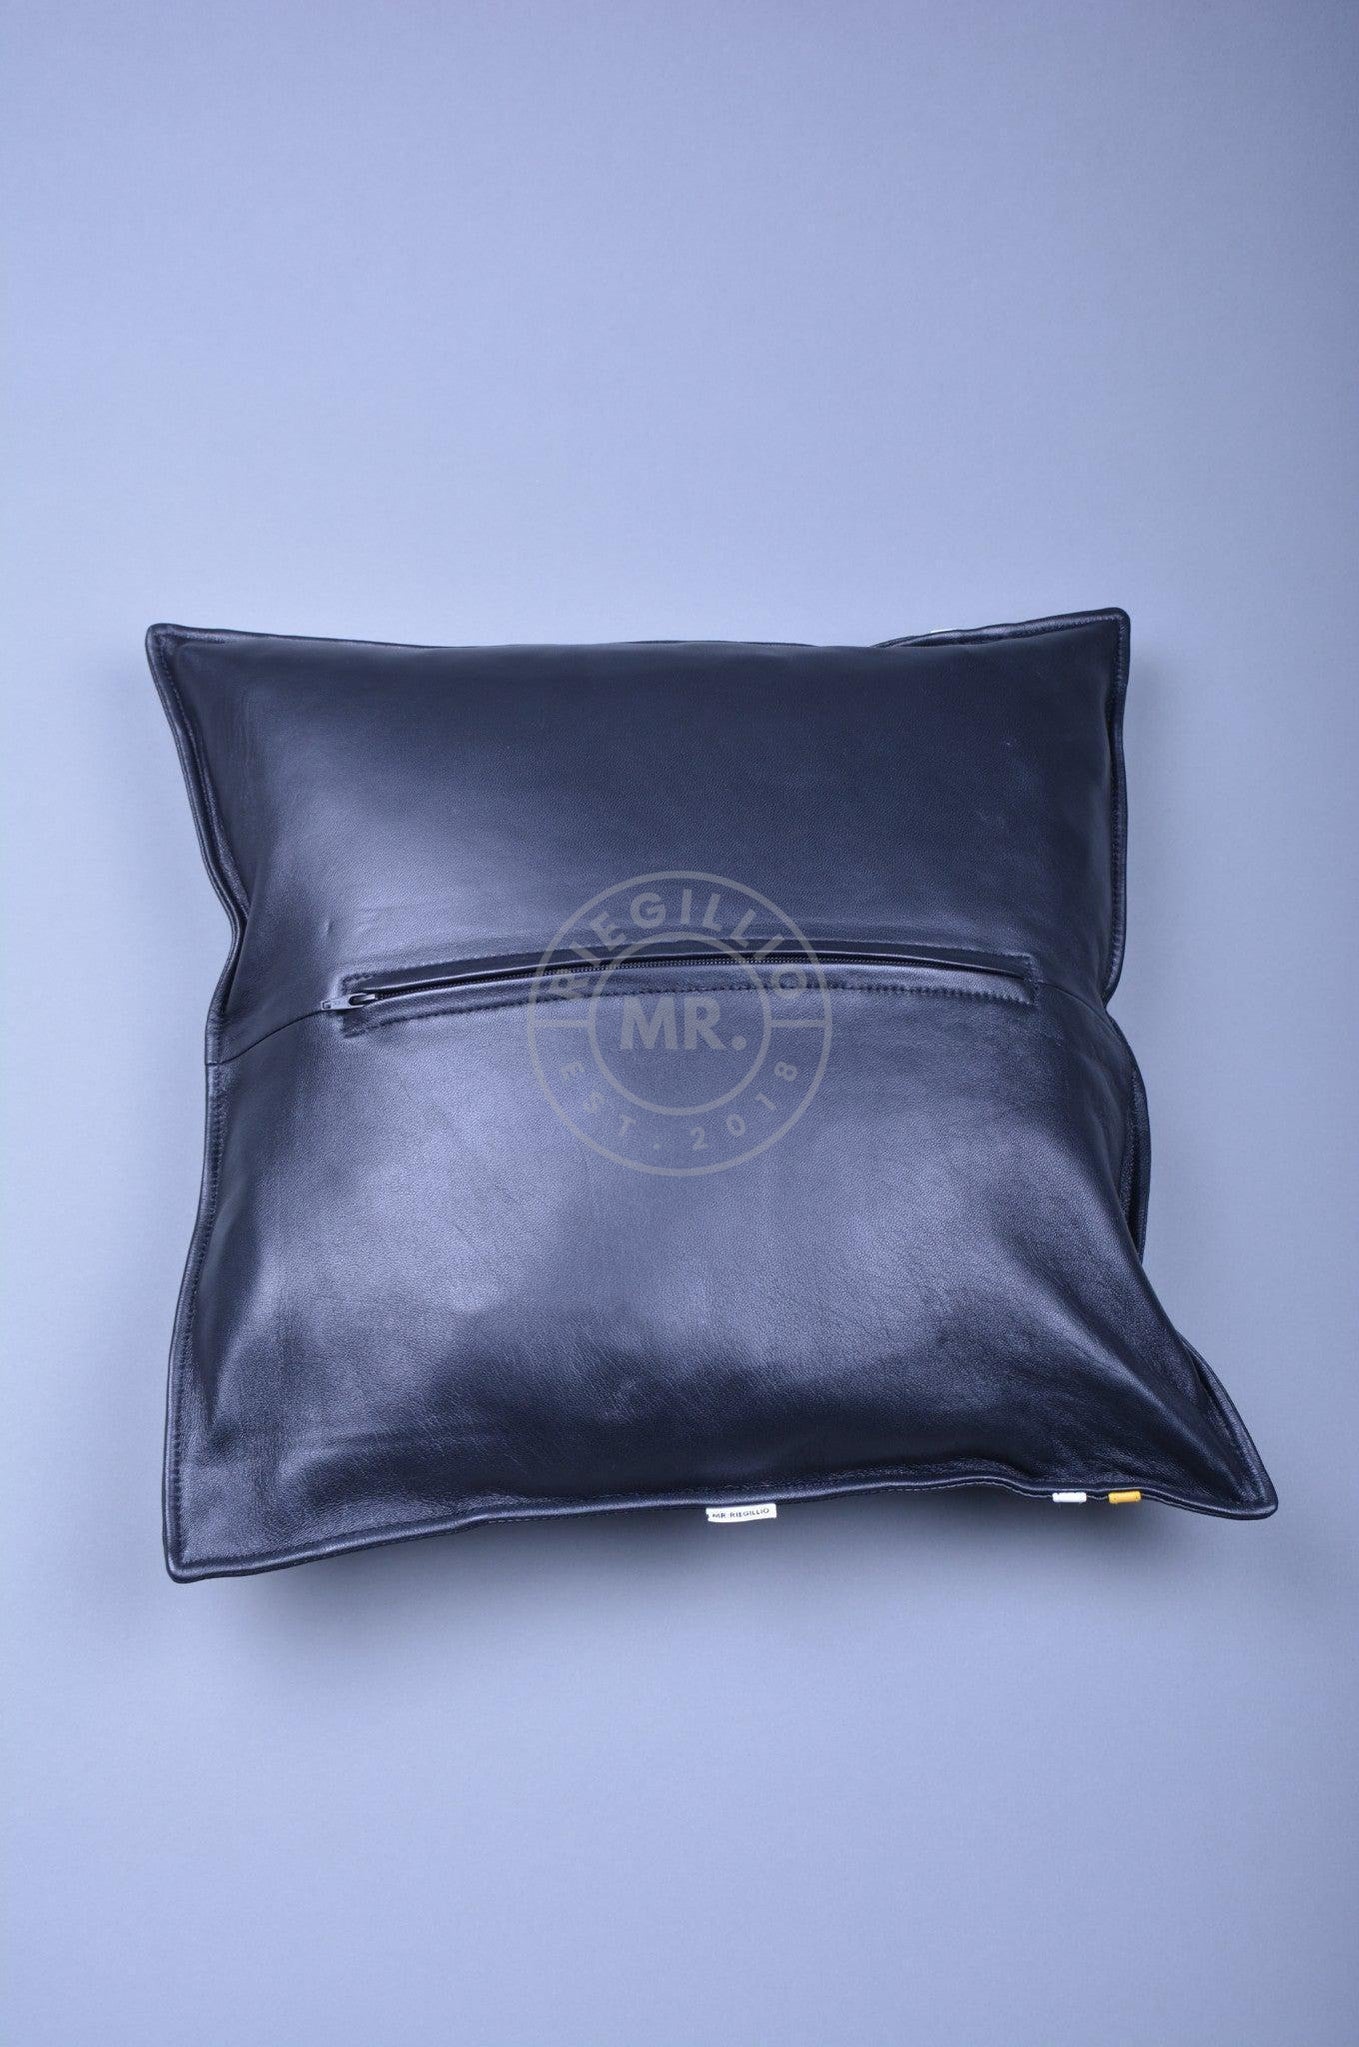 Black Leather Pillow - Red Stripe-at MR. Riegillio